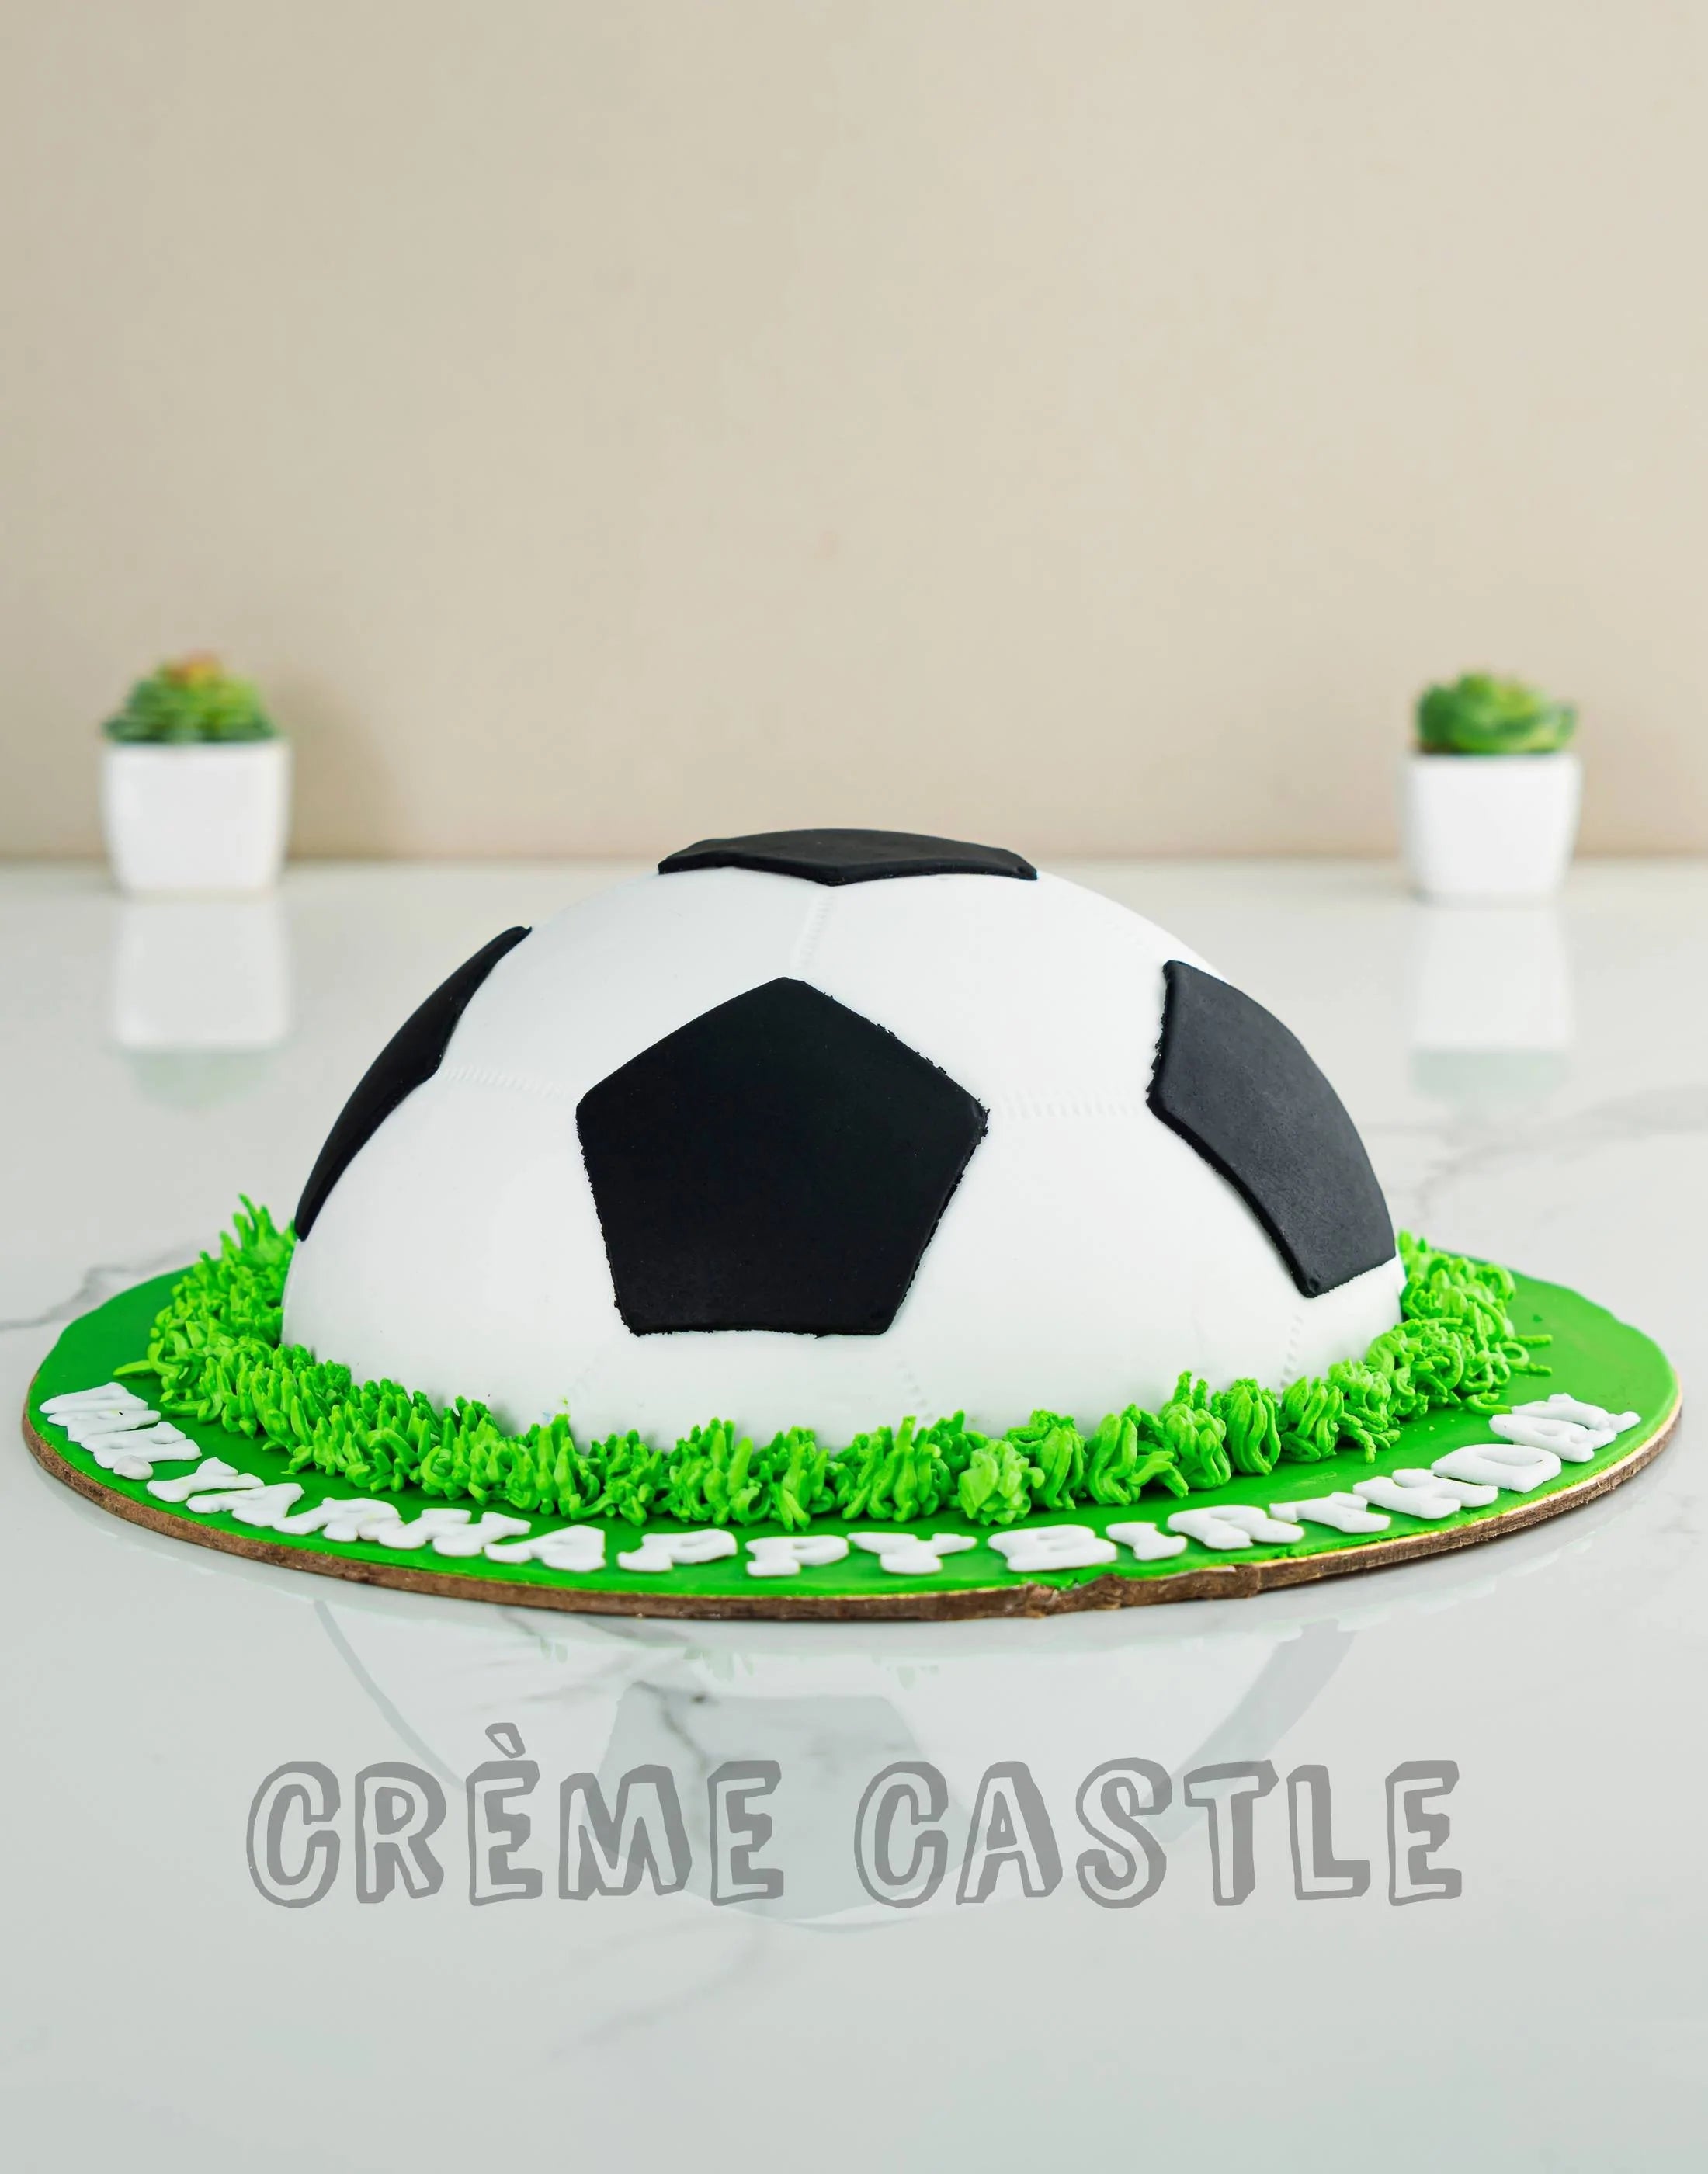 Boys Birthday Cakes | Boys Party Cakes - Cake Box